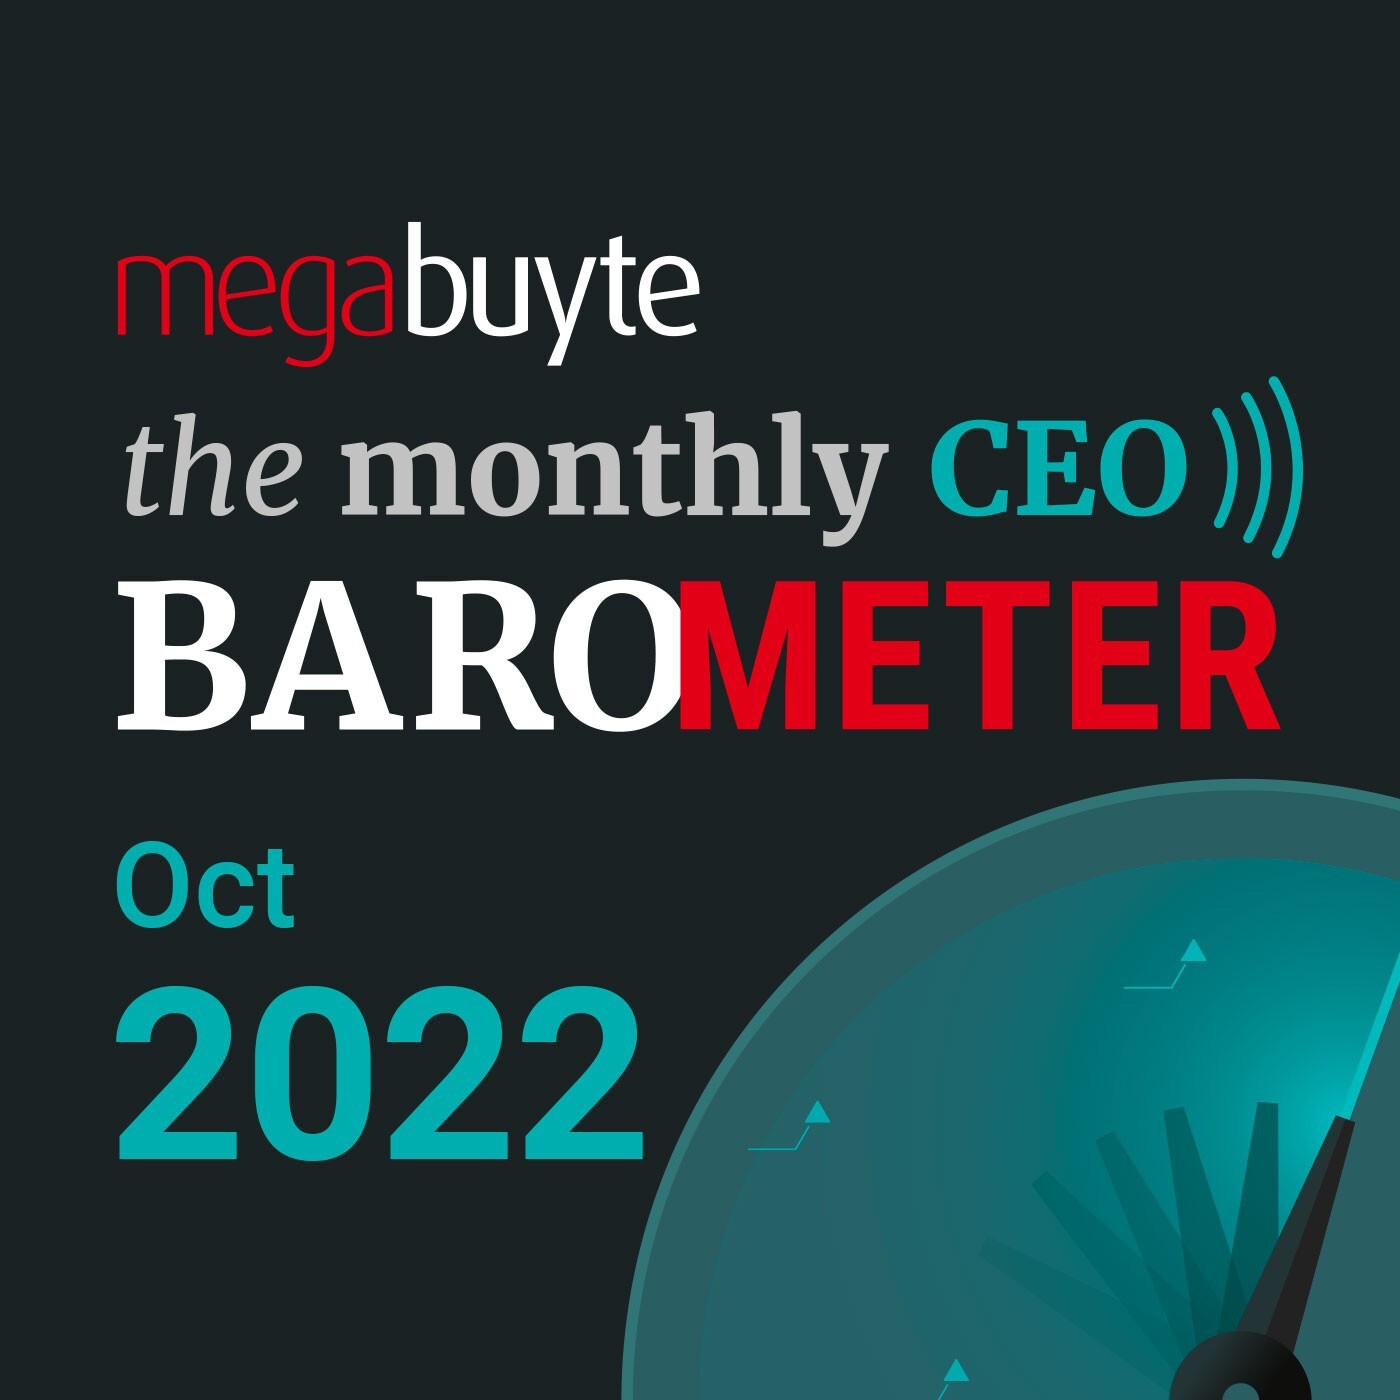 Megabuyte CEOBarometer - October 2022 update